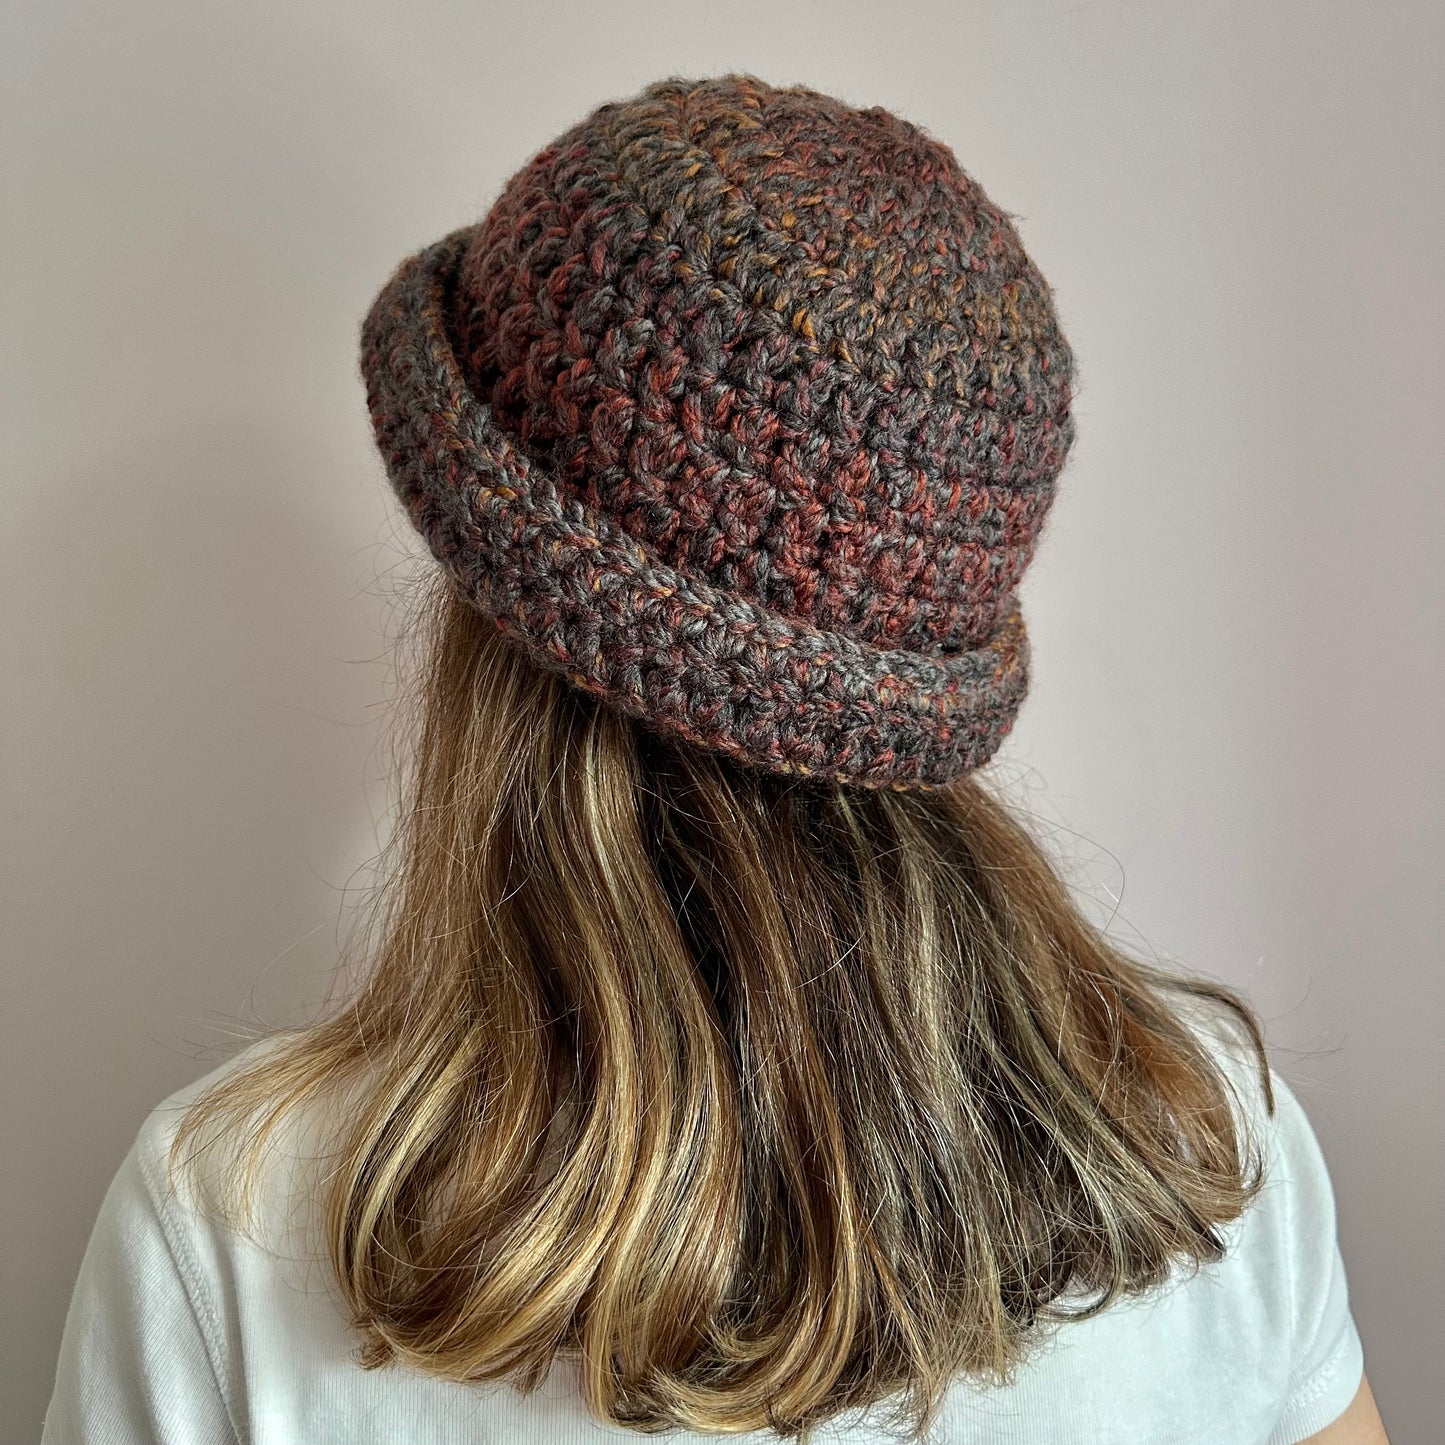 Handmade brown, grey and orange chunky crochet bowler hat